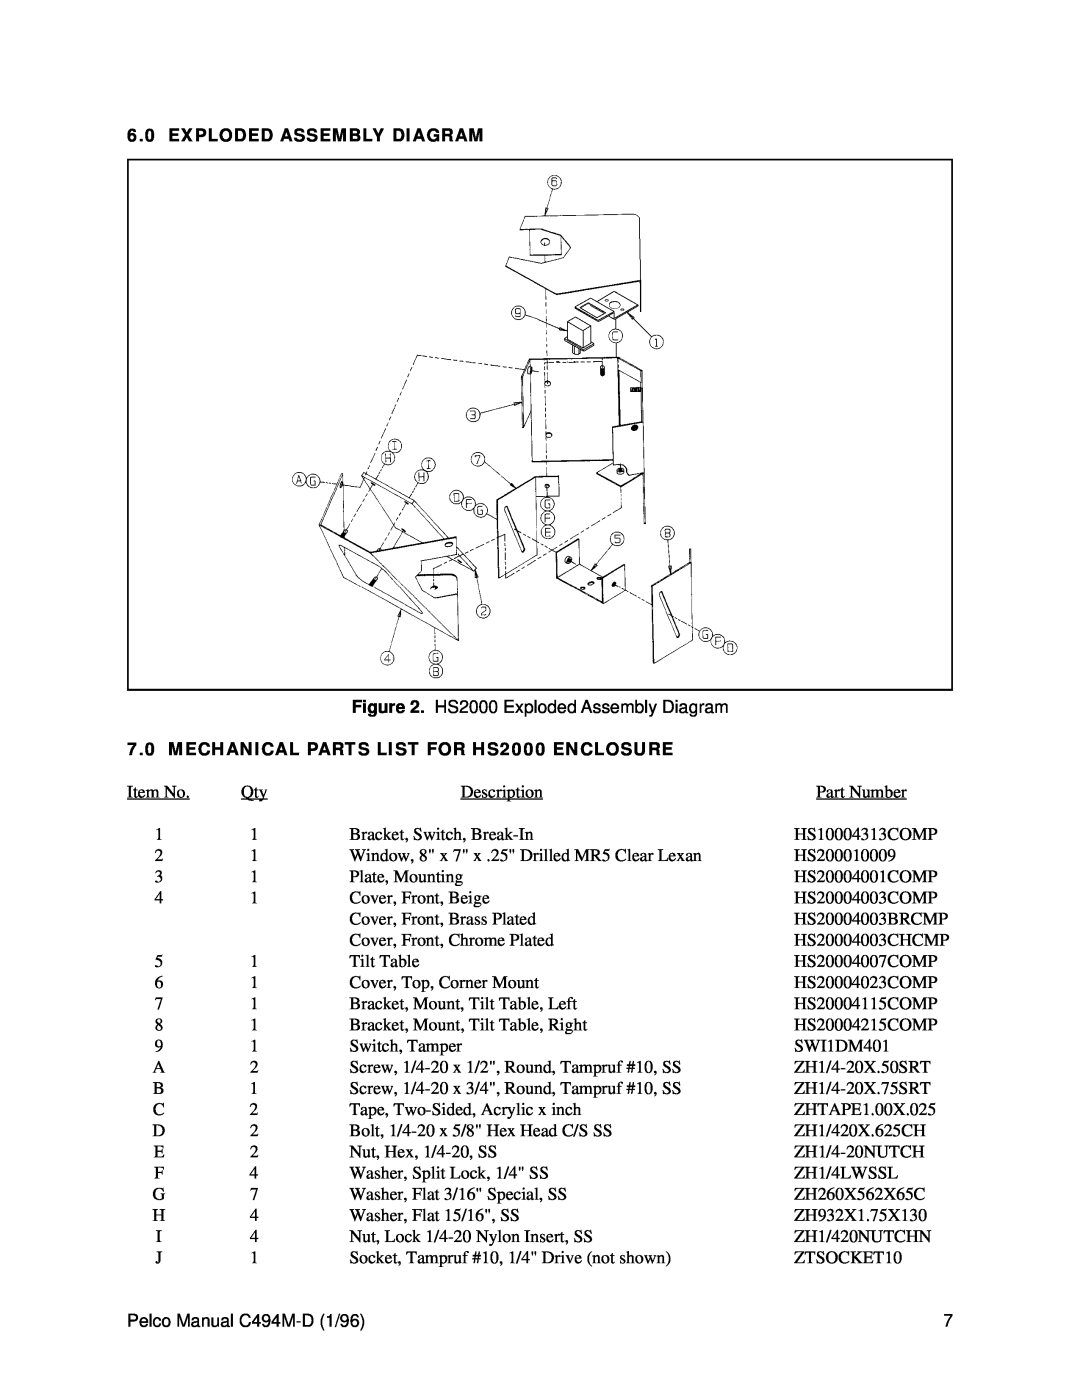 Pelco MECHANICAL PARTS LIST FOR HS2000 ENCLOSURE, HS2000 Exploded Assembly Diagram, Pelco Manual C494M-D1/96 